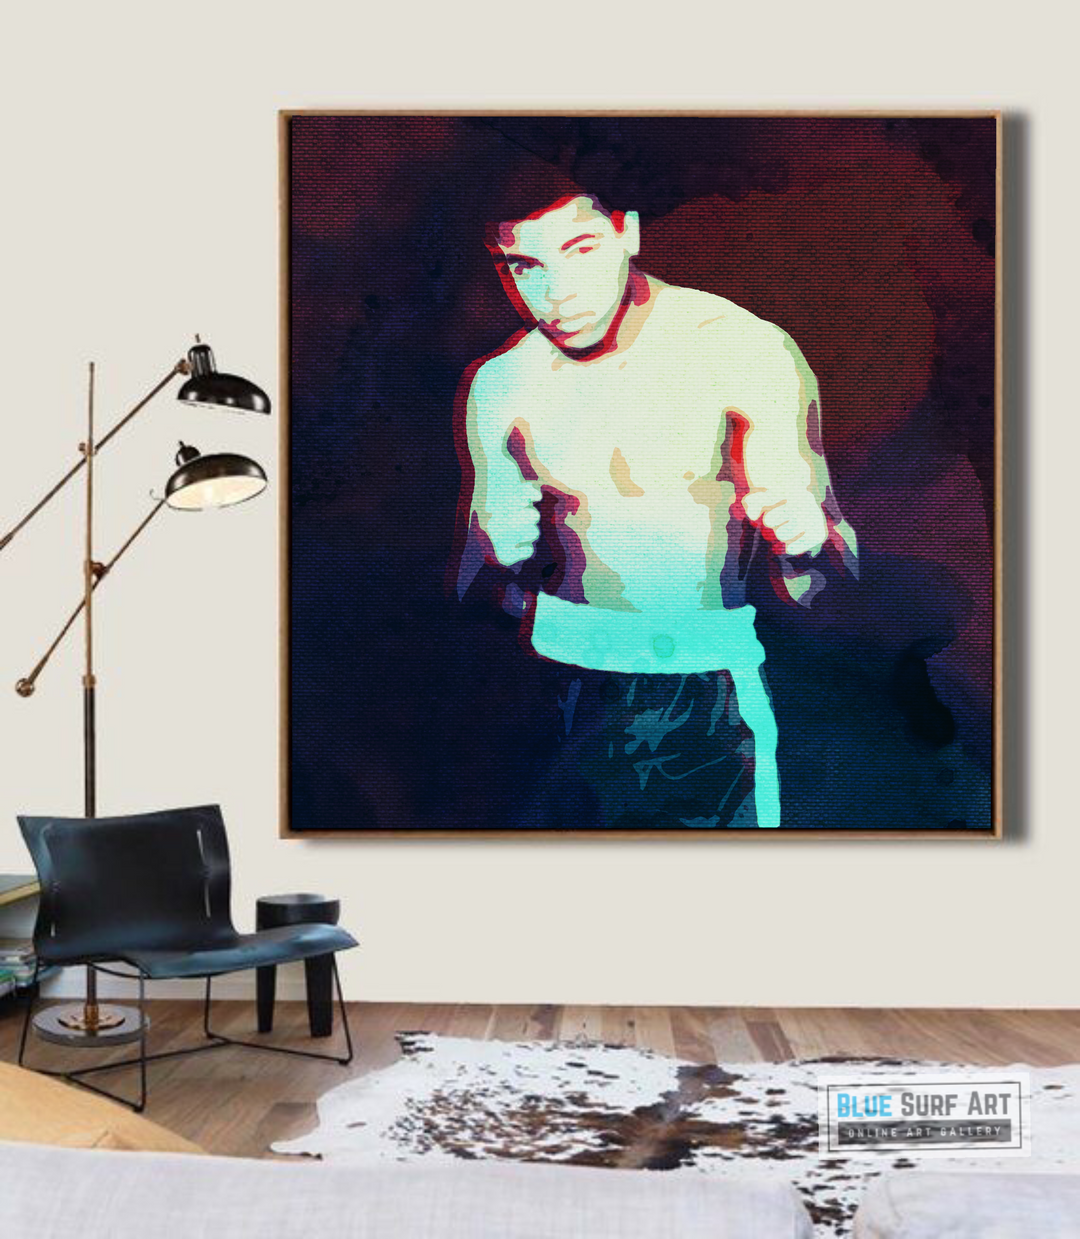 Muhammad Ali Boxer Legend Wall Art Original Handmade Oil on Canvas Painting 5